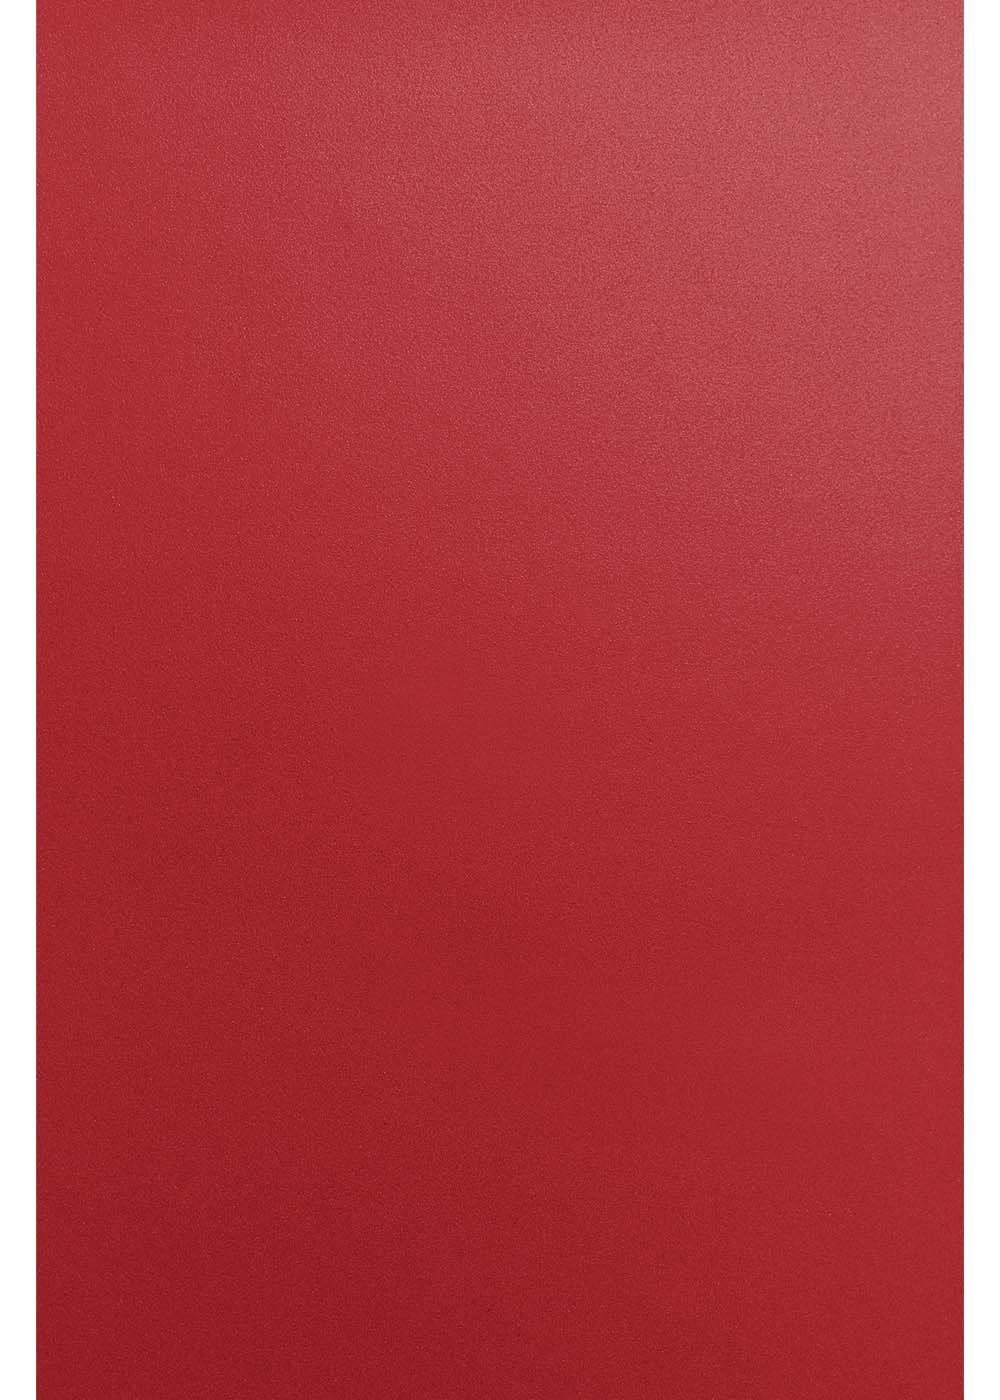 Hilltop Transparentpapier Reflektierende Transferfolie, Textilfolie, mehrfarbig, 30x20 cm Rot